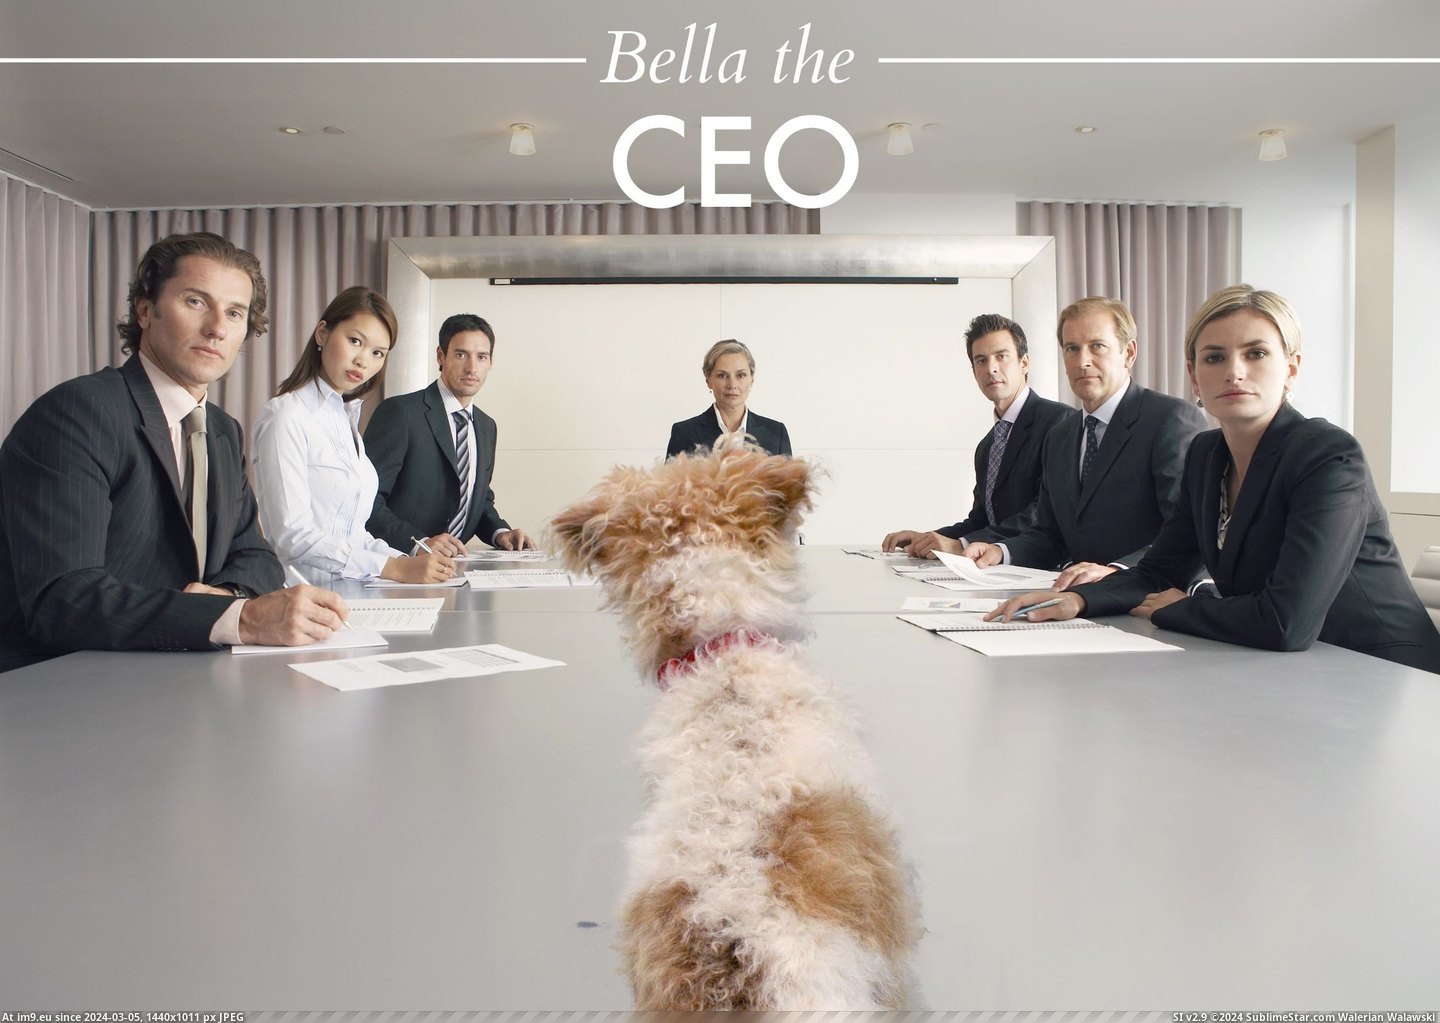 #For #Year #Dog #Calendar #Bella #Workplace #Christmas #Family #Called [Aww] Every Christmas I make a calendar of my dog for my family. This year's calendar is called 'Bella in the Workplace 2014'. I Pic. (Изображение из альбом My r/AWW favs))